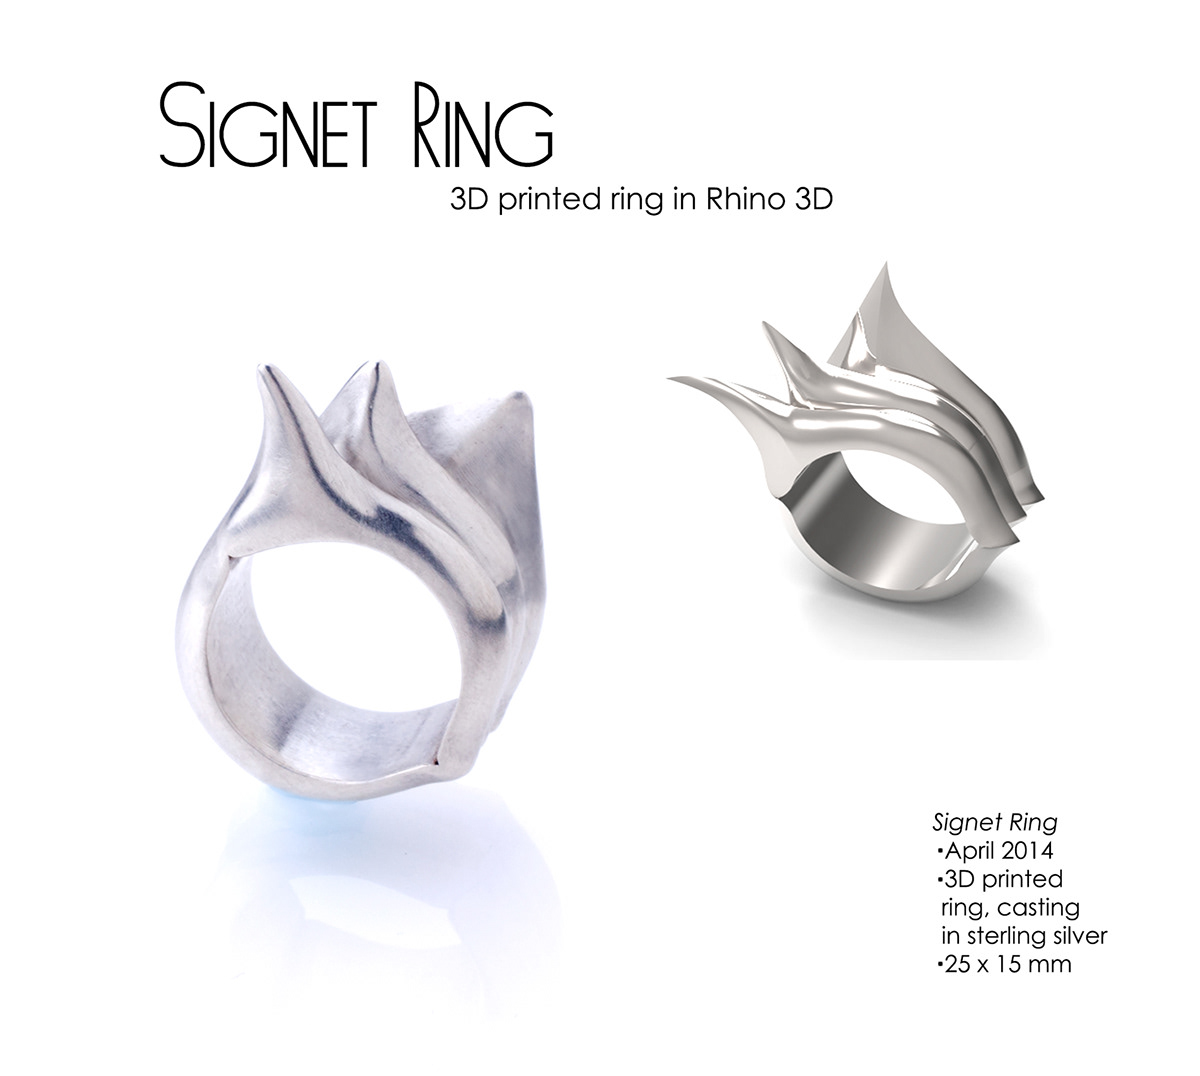 Rhino 3D Rapid Prototyping 3d printing casting Key shot cad ring